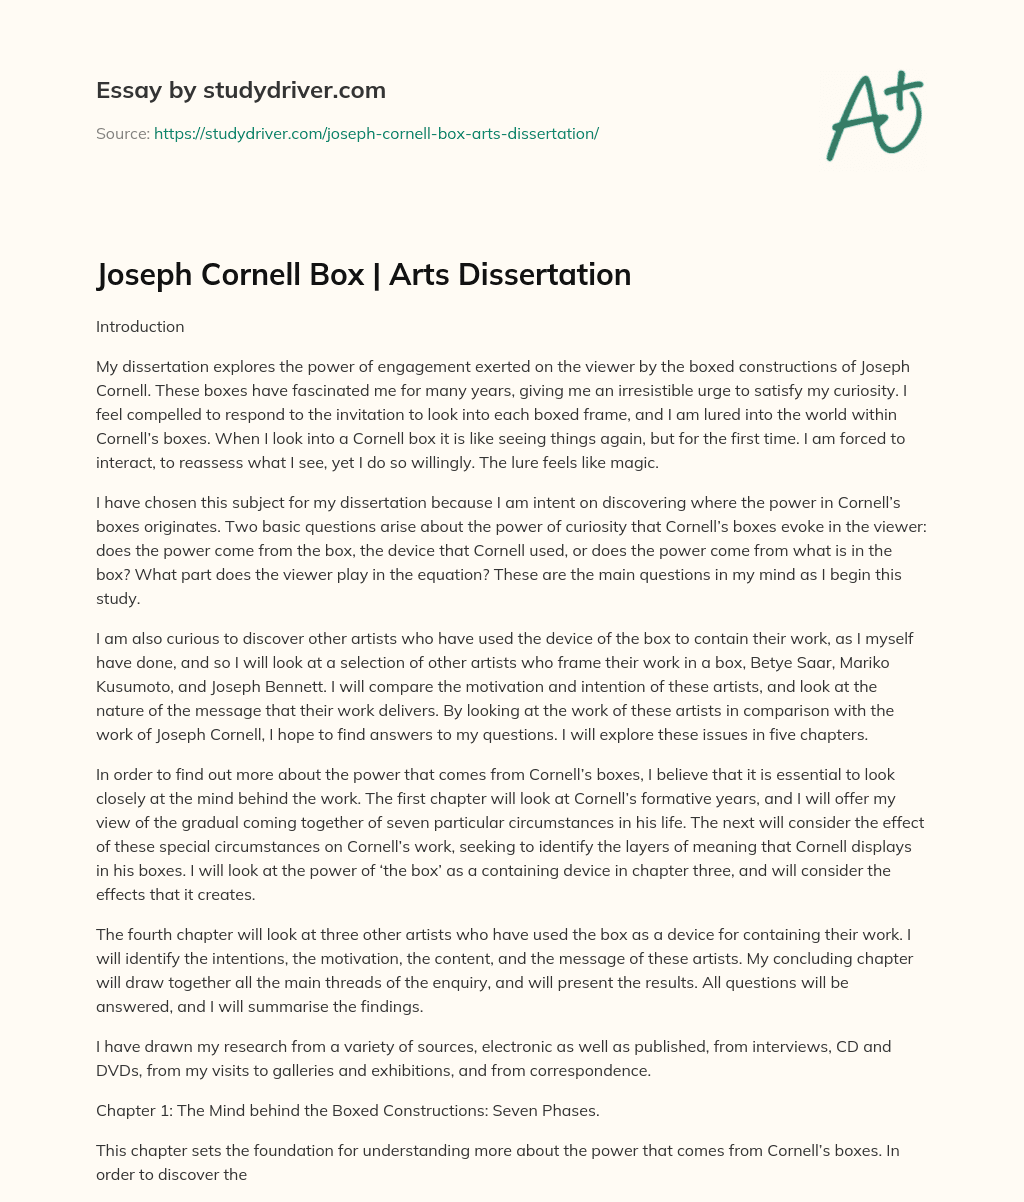 Joseph Cornell Box | Arts Dissertation essay